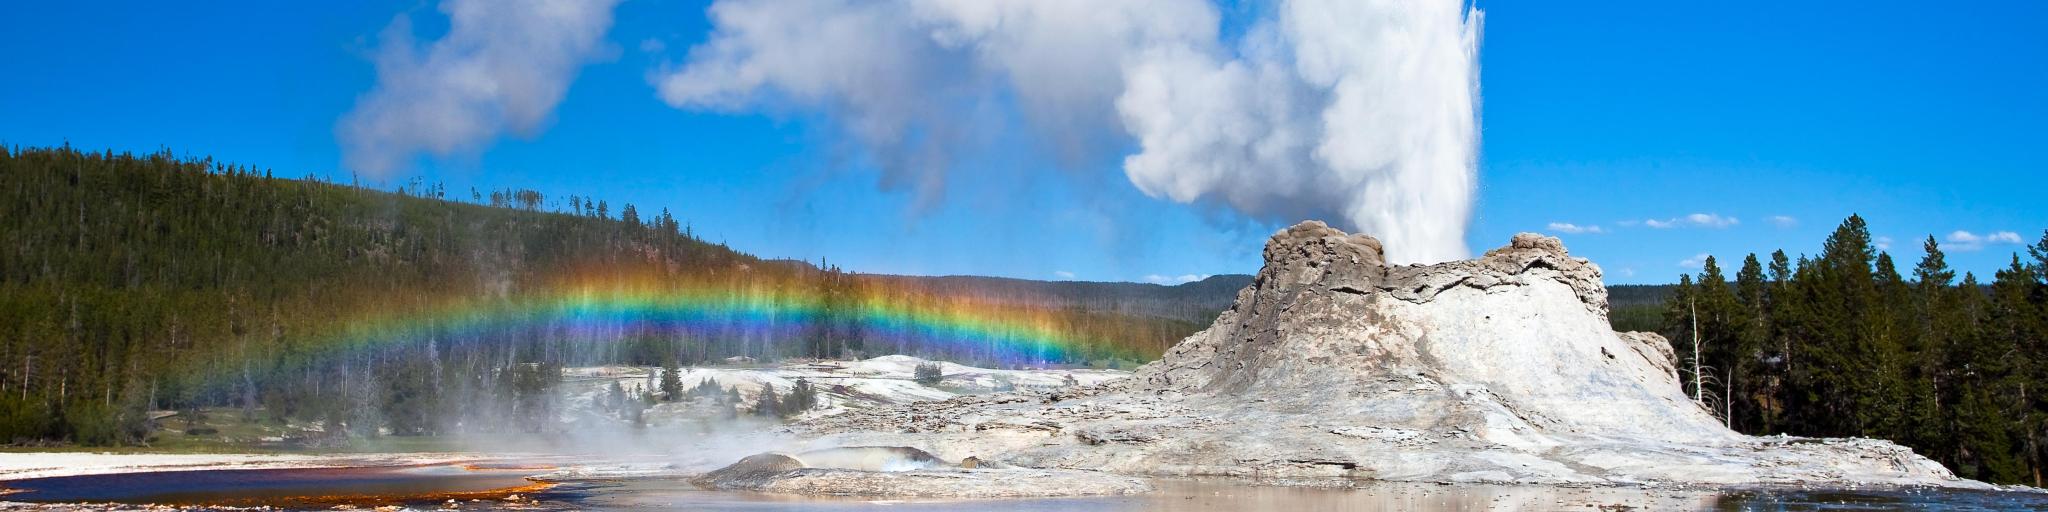 Rainbow near Castle geyser on a clear day, Yellowstone National Park, Wyoming, USA. 